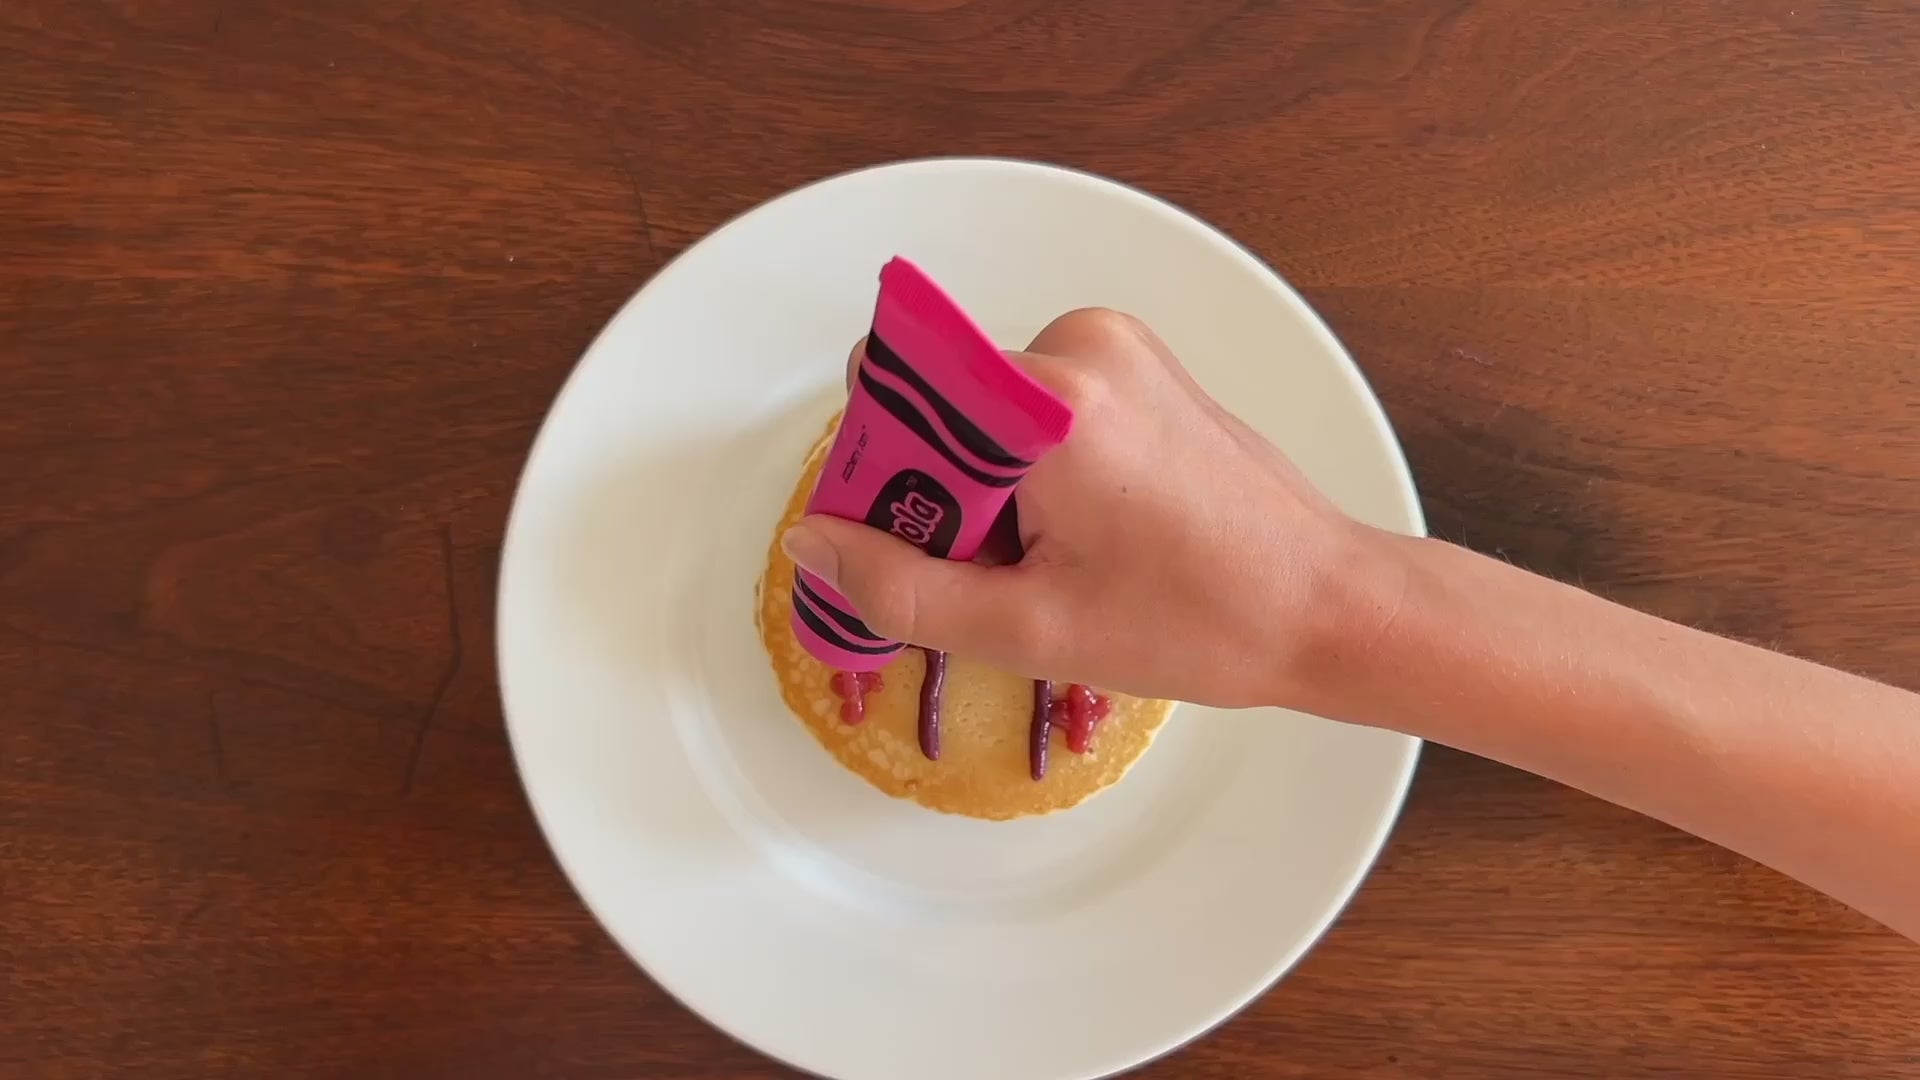 Load video: Video of children enjoying food paint with pancakes, waffles, fruit and yogurt.